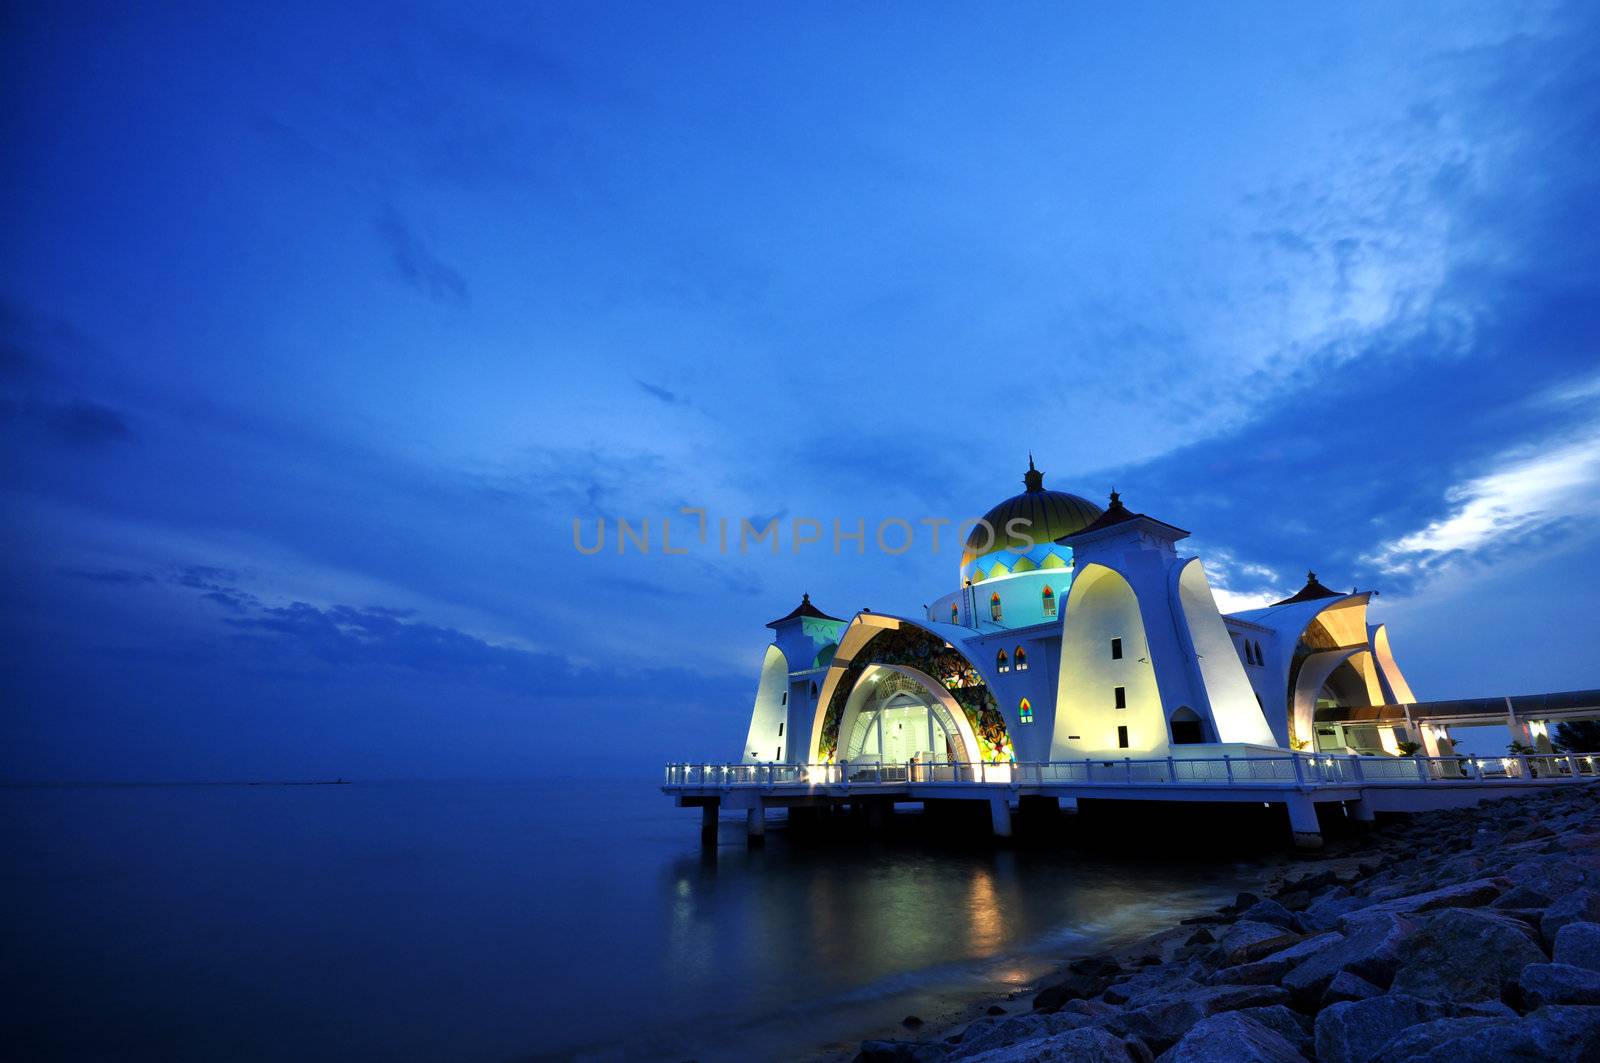 The Selat Melaka Mosque at Melaka, Malaysia in dusk.